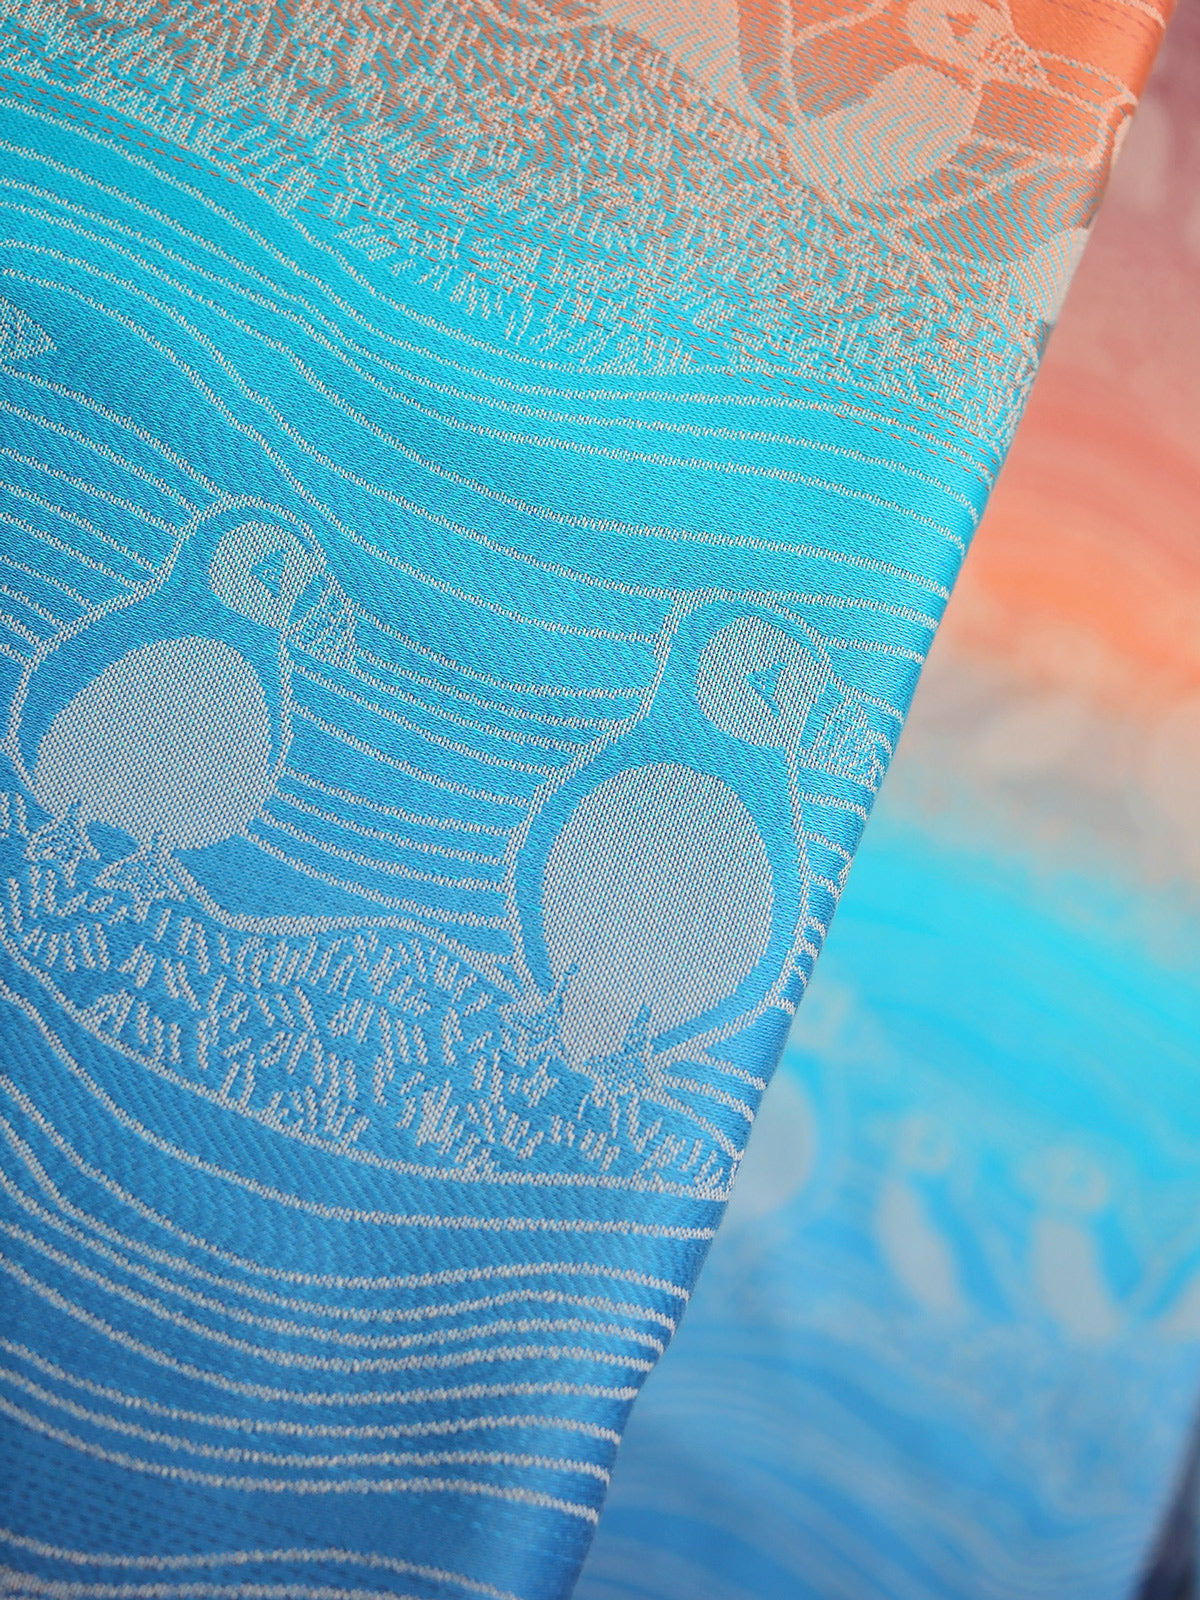 Puffins Farne Islands Fabric Pieces